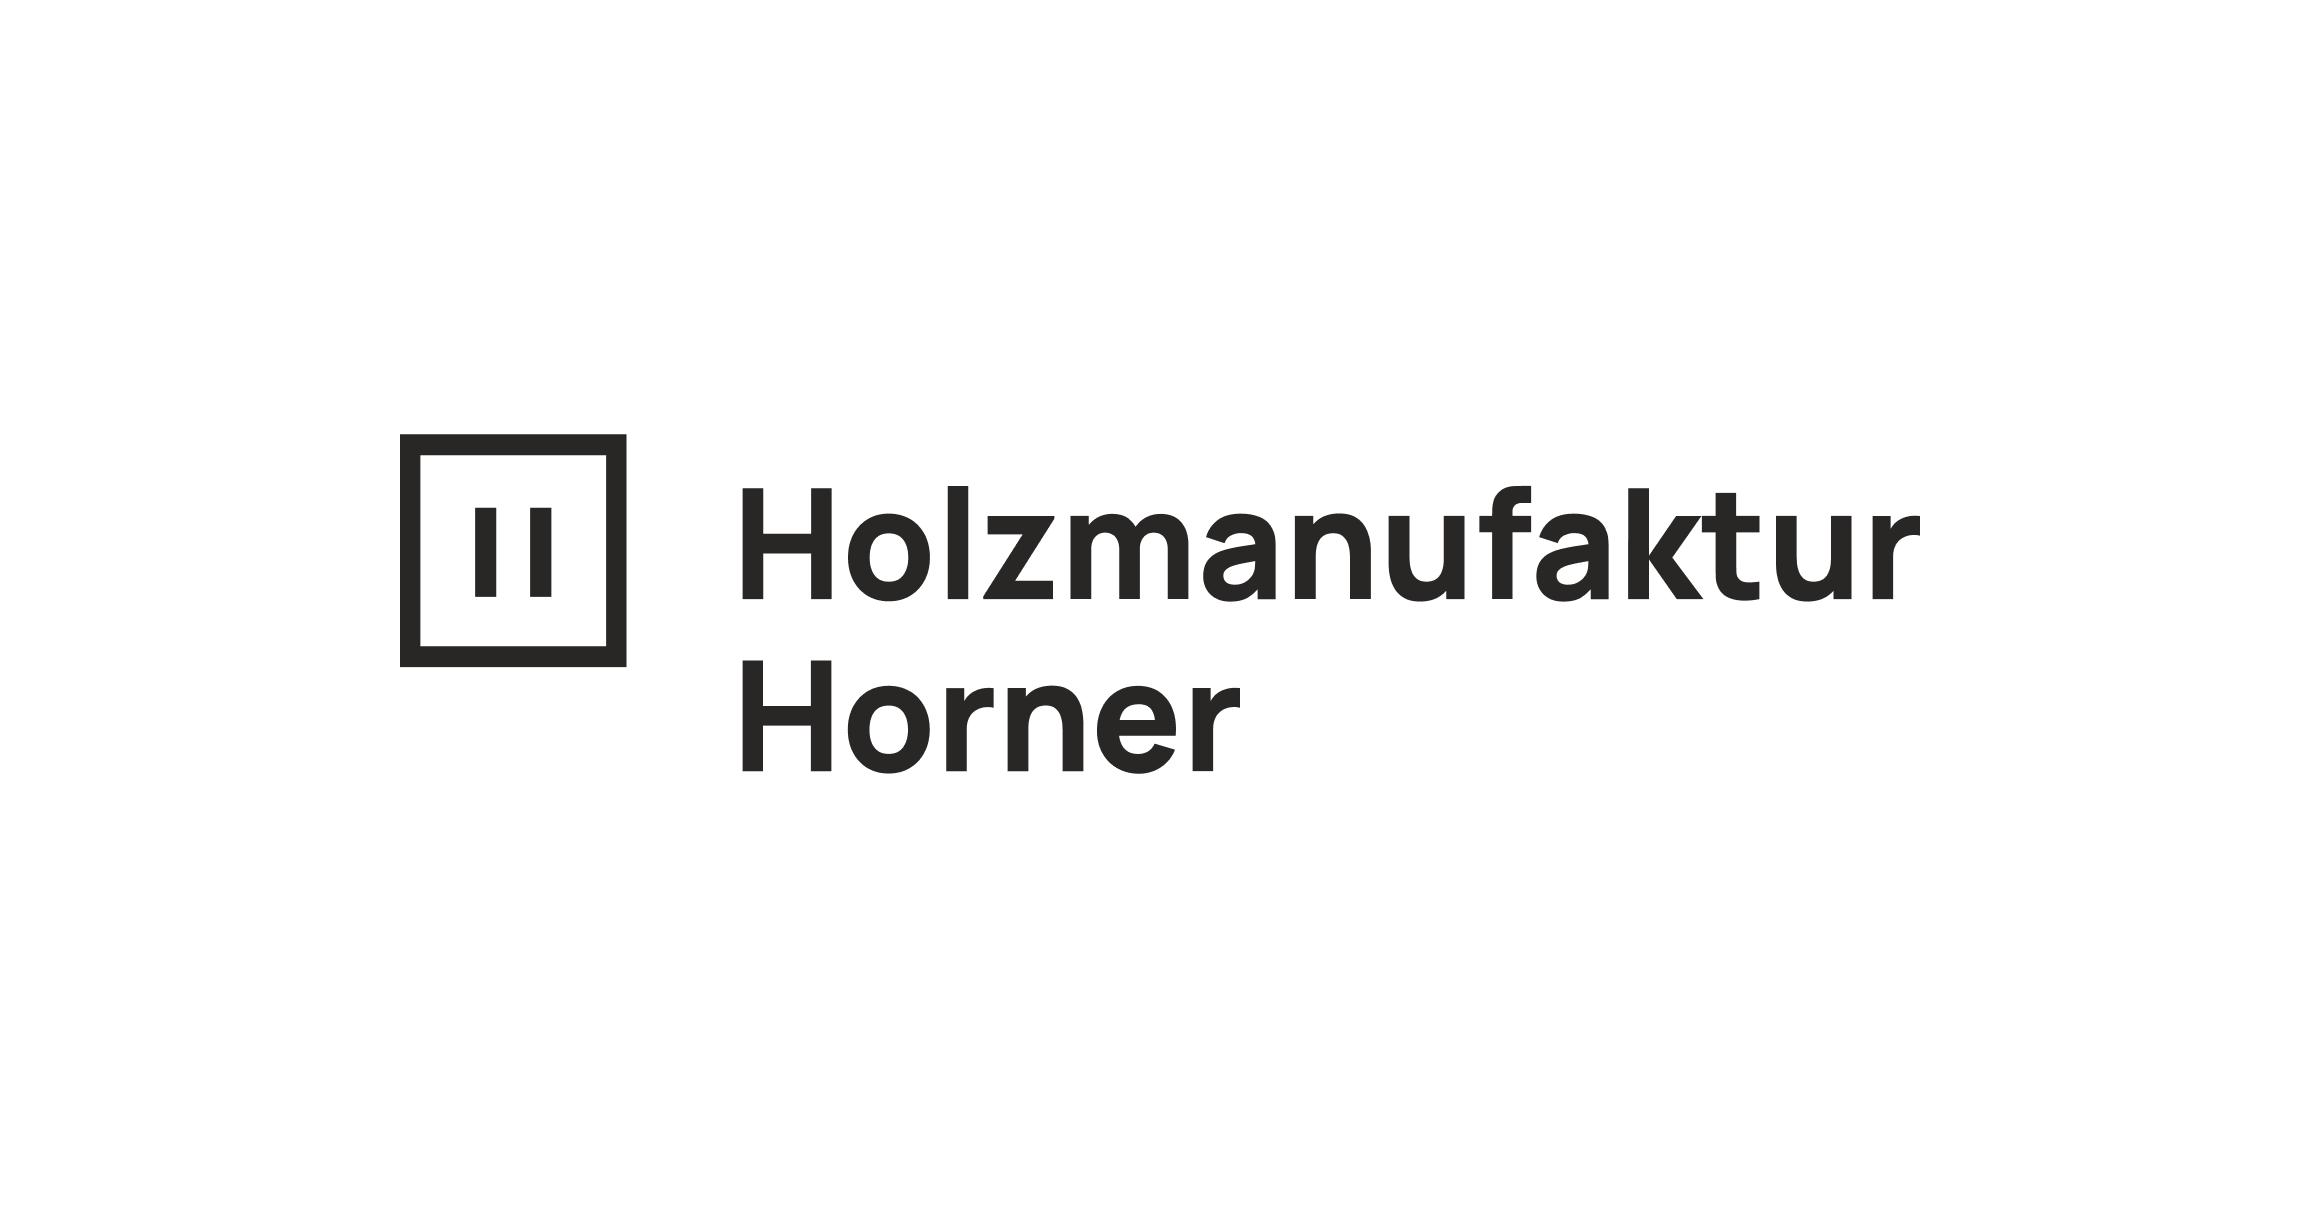 holzmanufaktur-partner-logo-580x302-4x